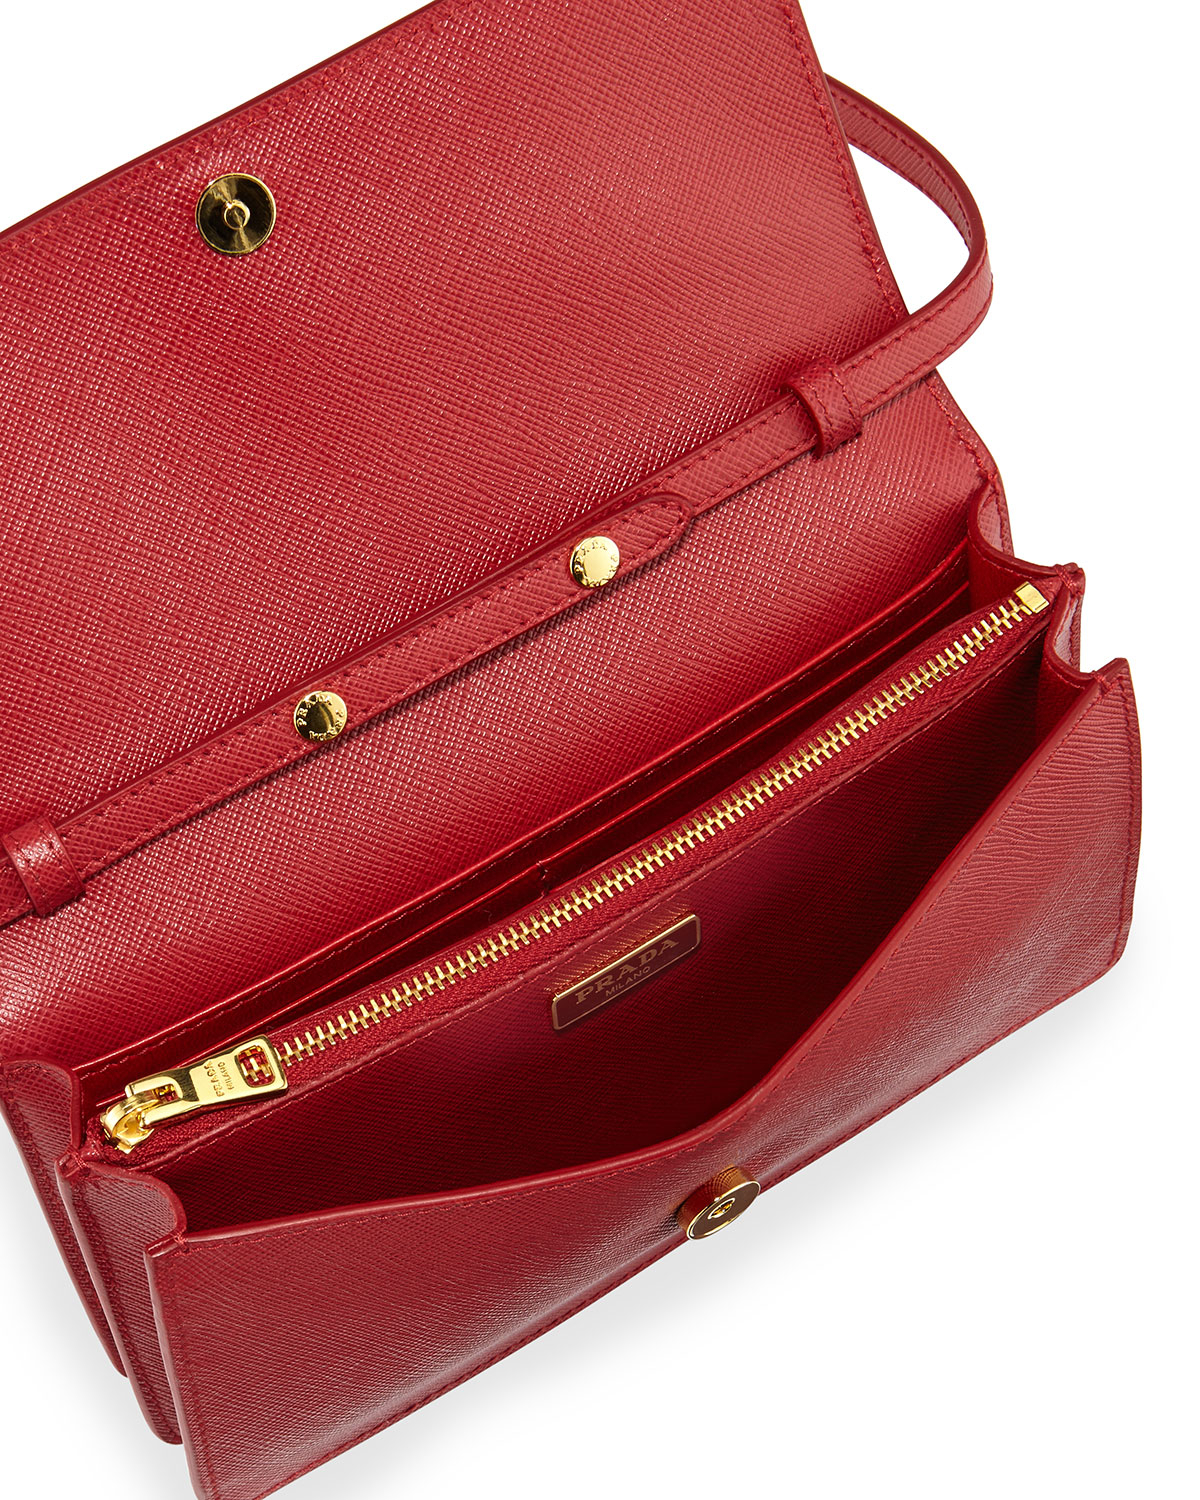 Prada Saffiano Mini Cross-Body Bag in Red | Lyst